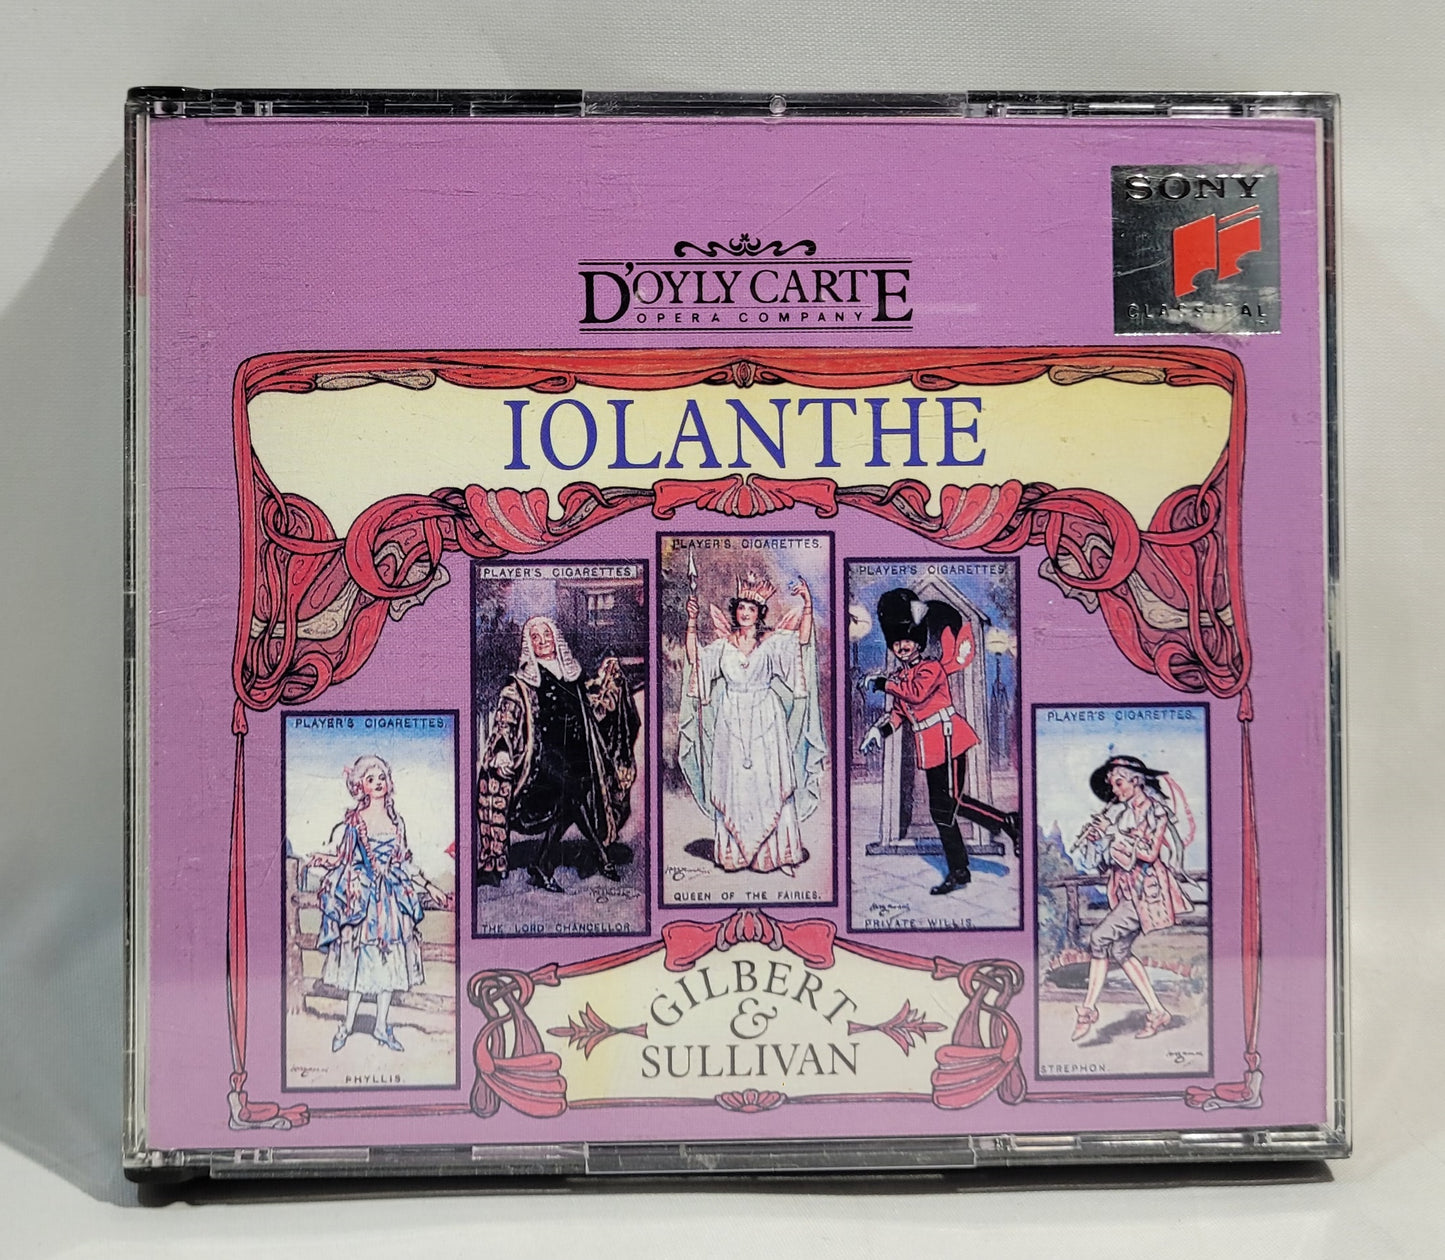 Gilbert & Sullivan, D'Oyly Carte Opera Company - Iolanthe [Double CD]